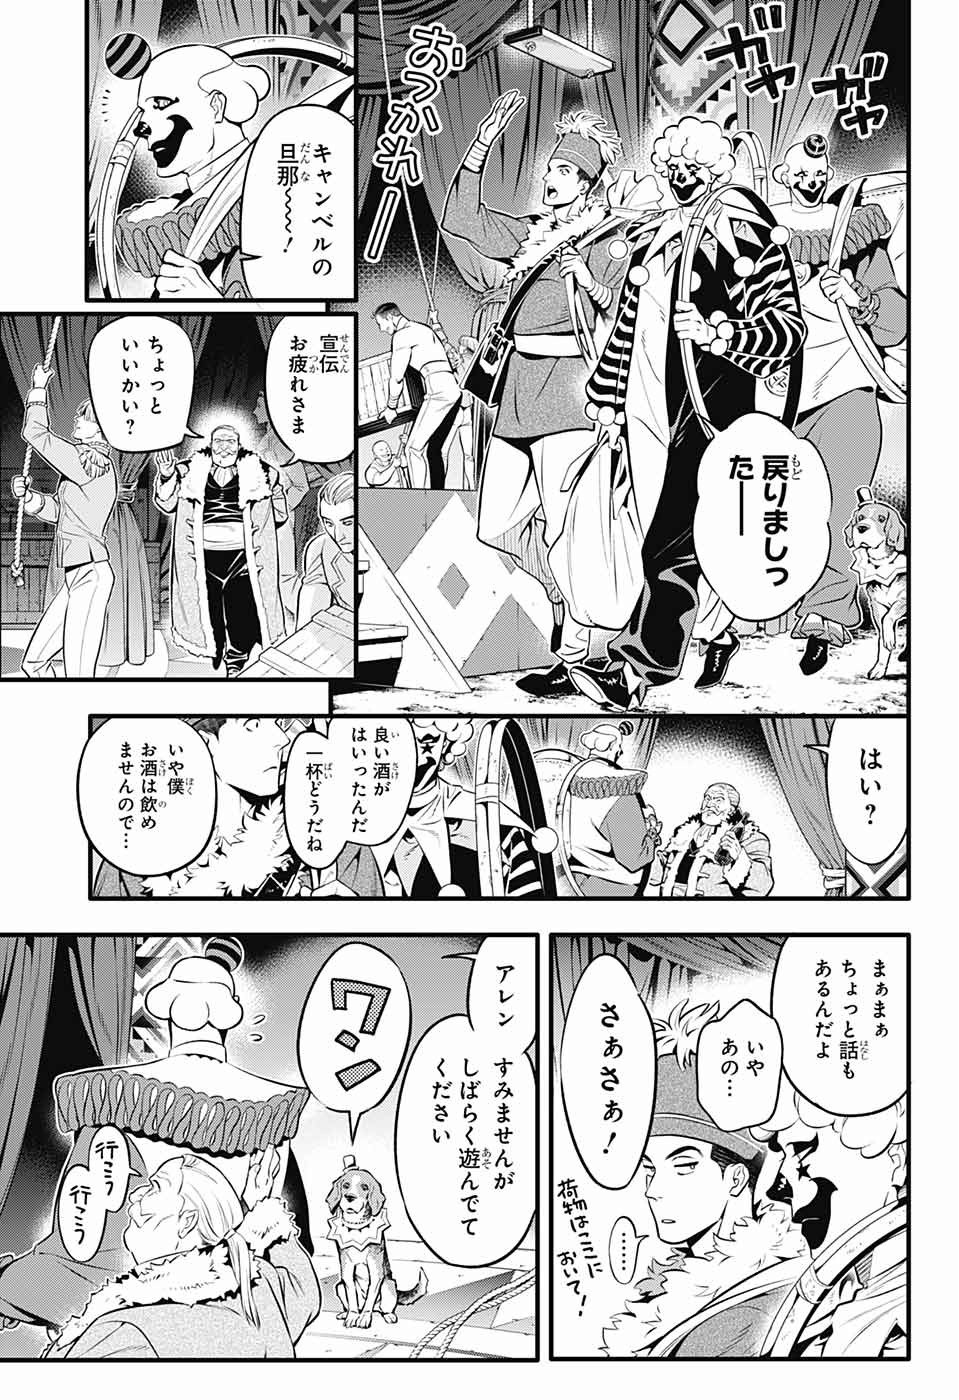 D Gray Man Chapter 235 Page 9 Raw Manga 生漫画